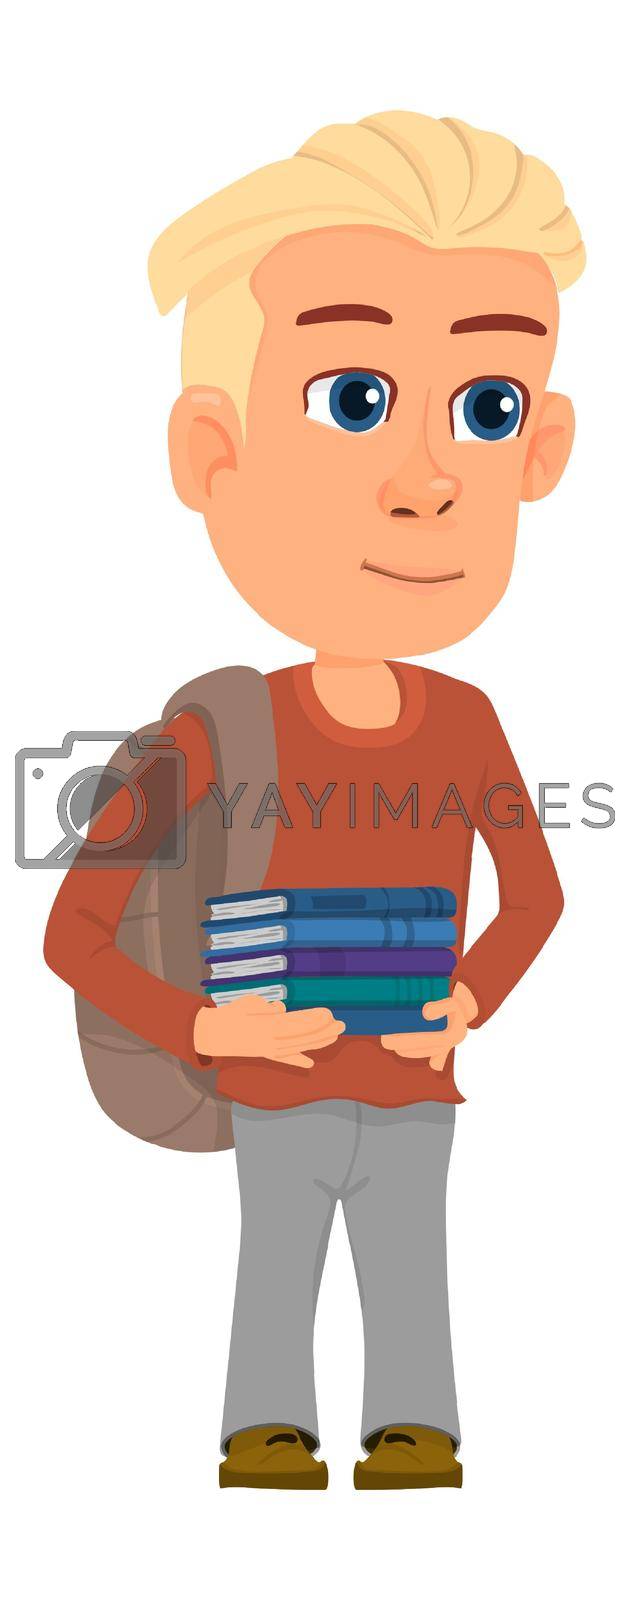 Royalty free image of Cartoon student. Cute blonde boy with backpack by LadadikArt